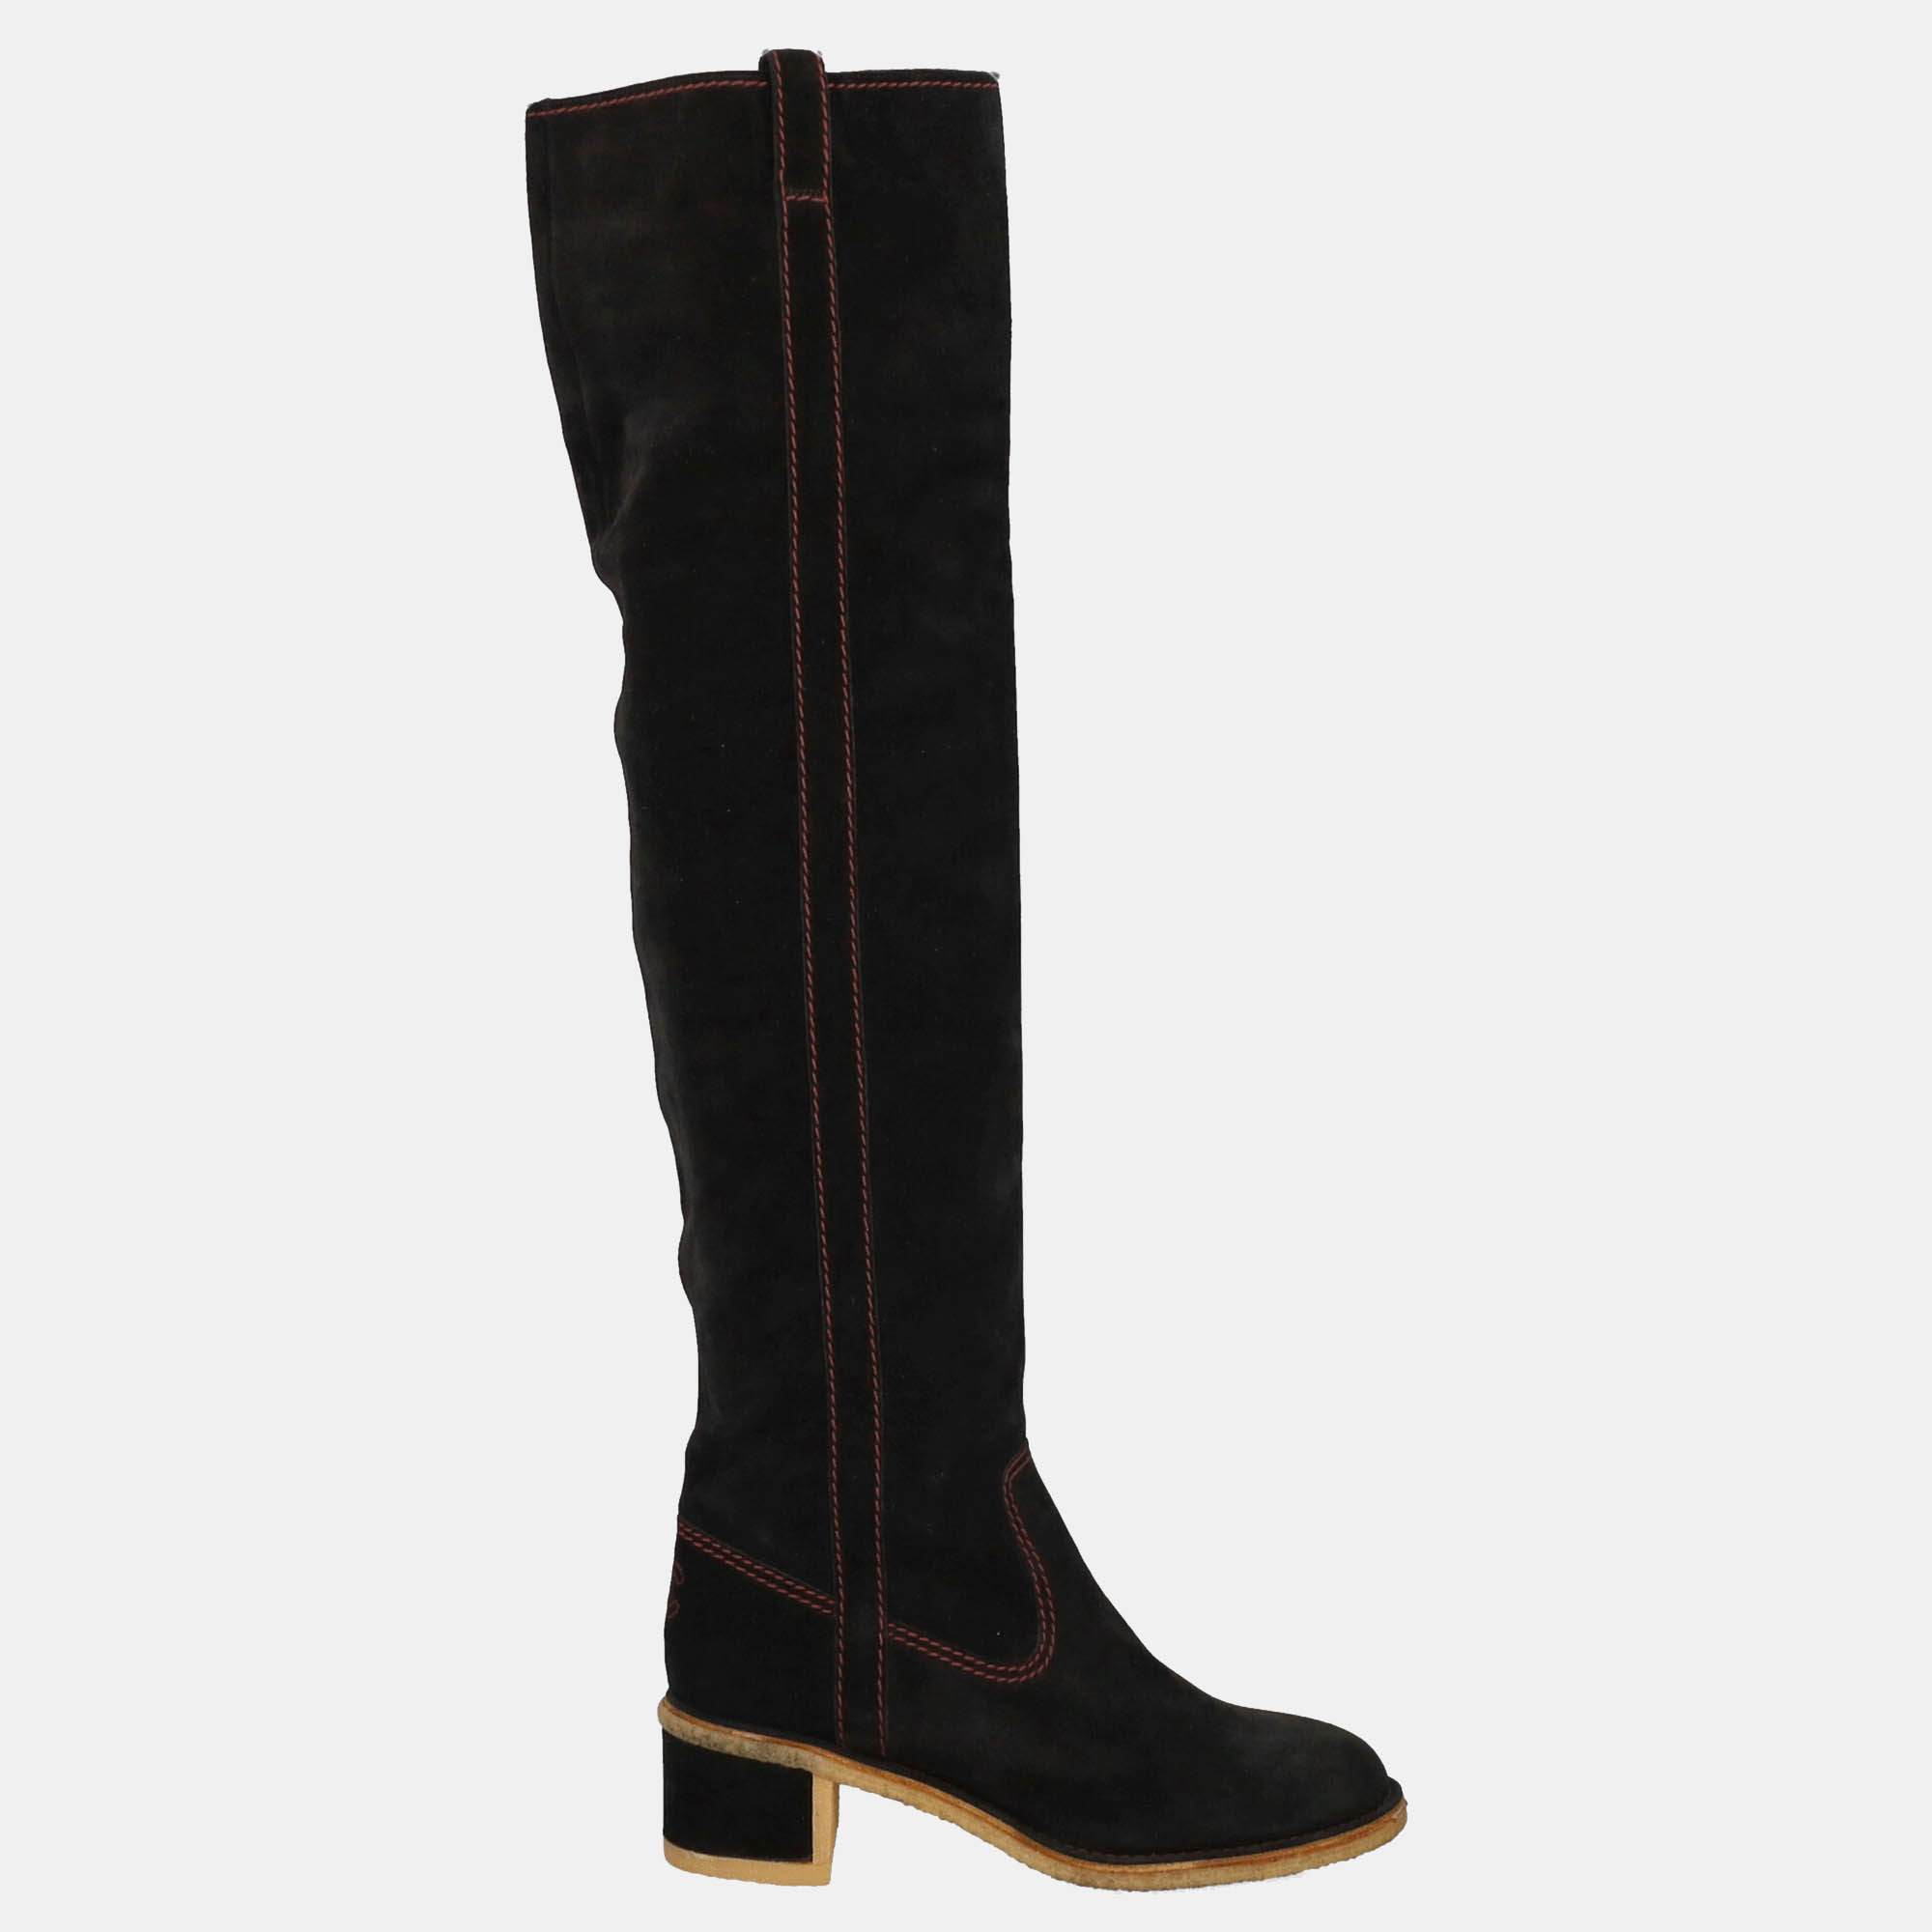 Chanel  Women's Leather Boots - Black - EU 38